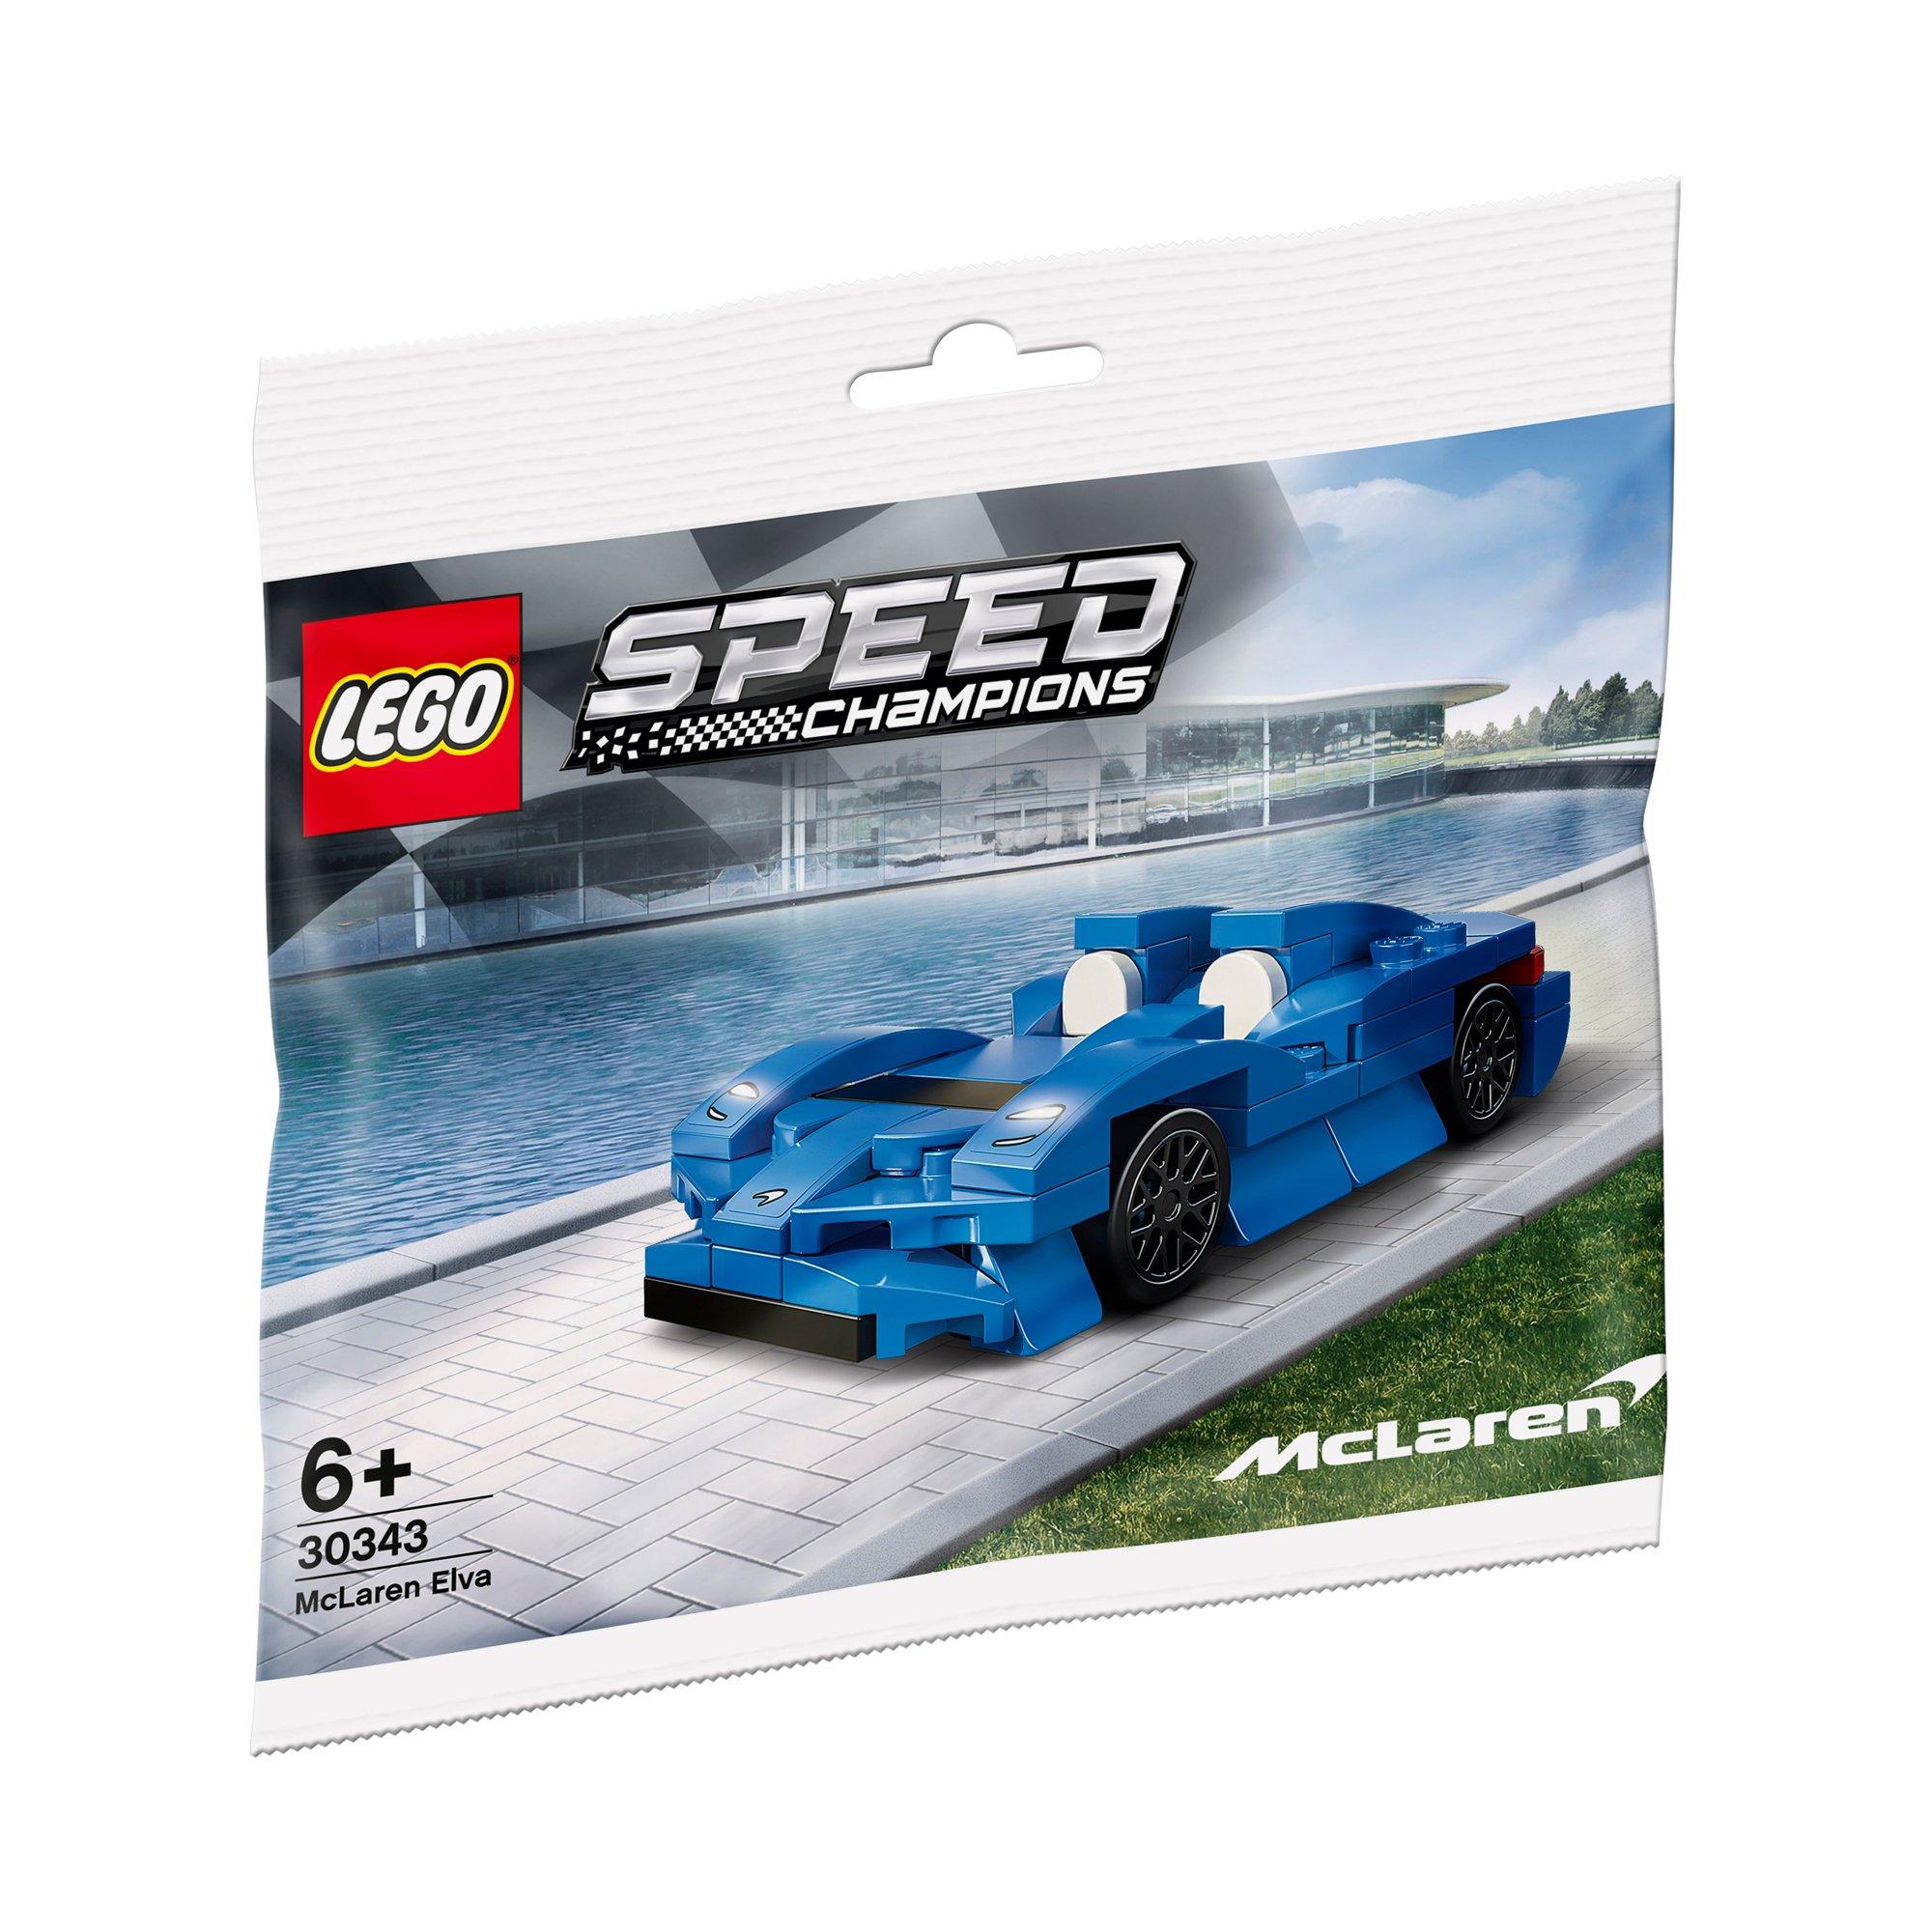 Image of LEGO 30343 McLaren Elva